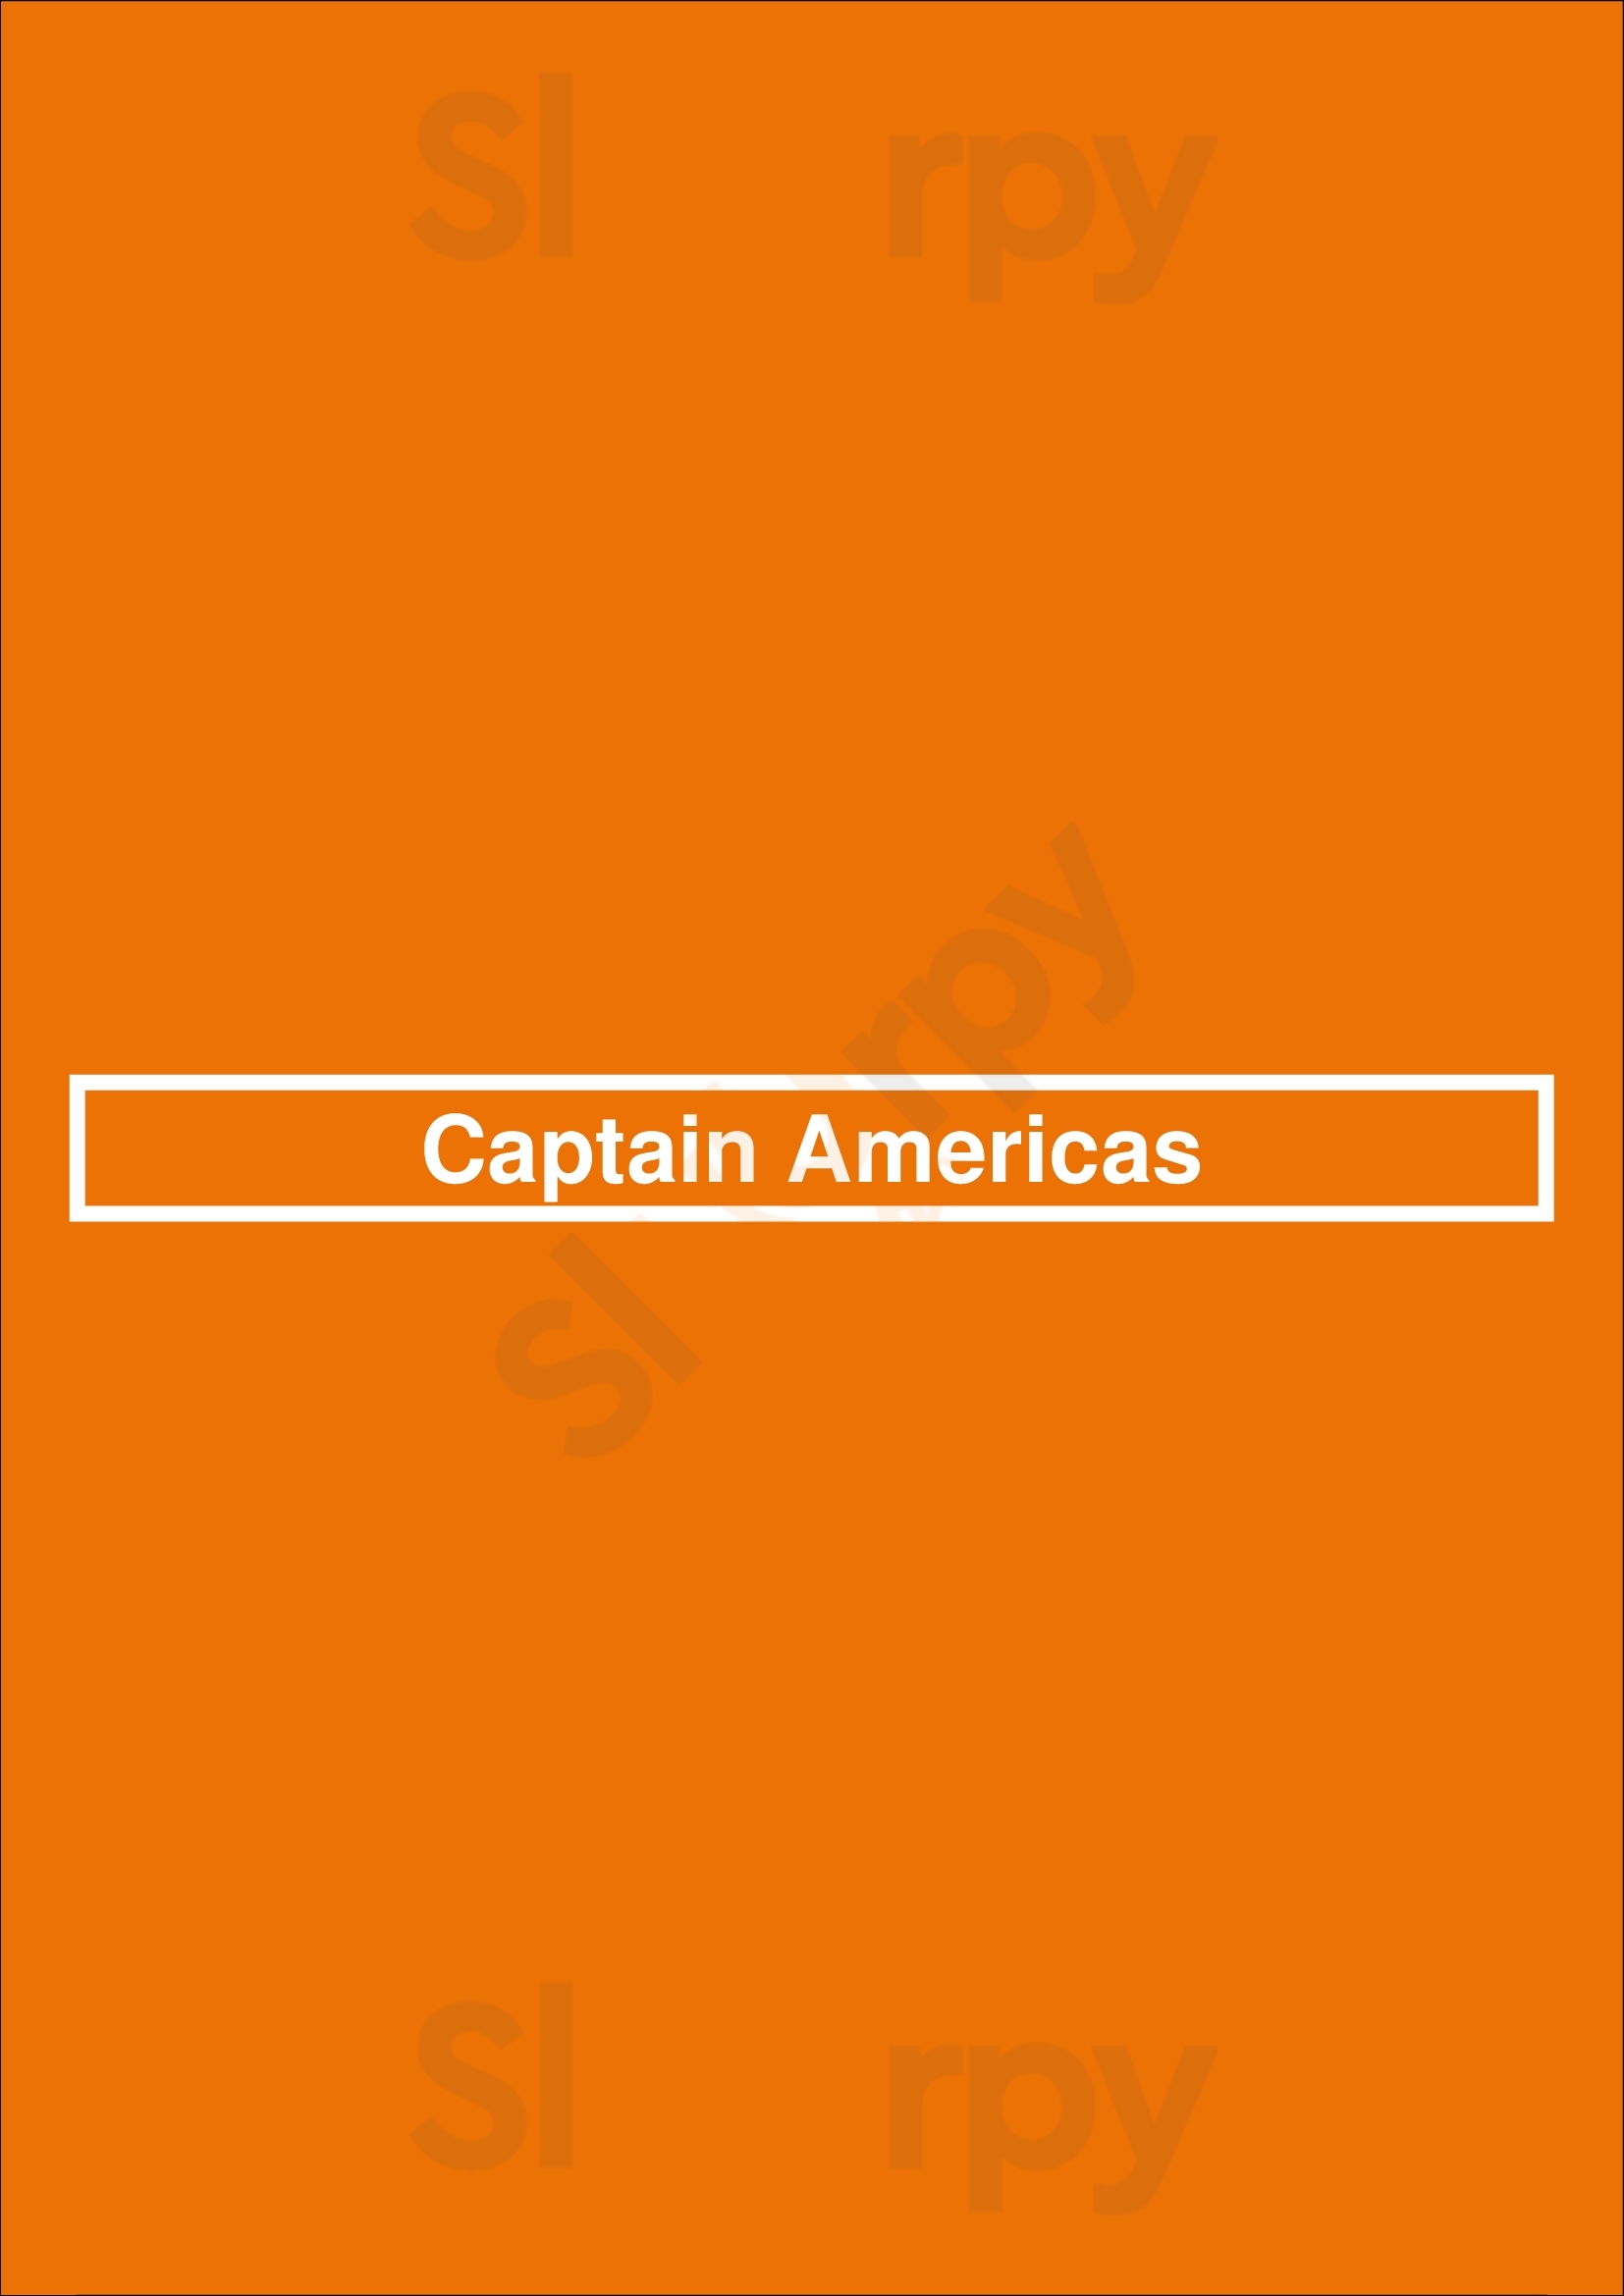 Captain Americas Cork Menu - 1